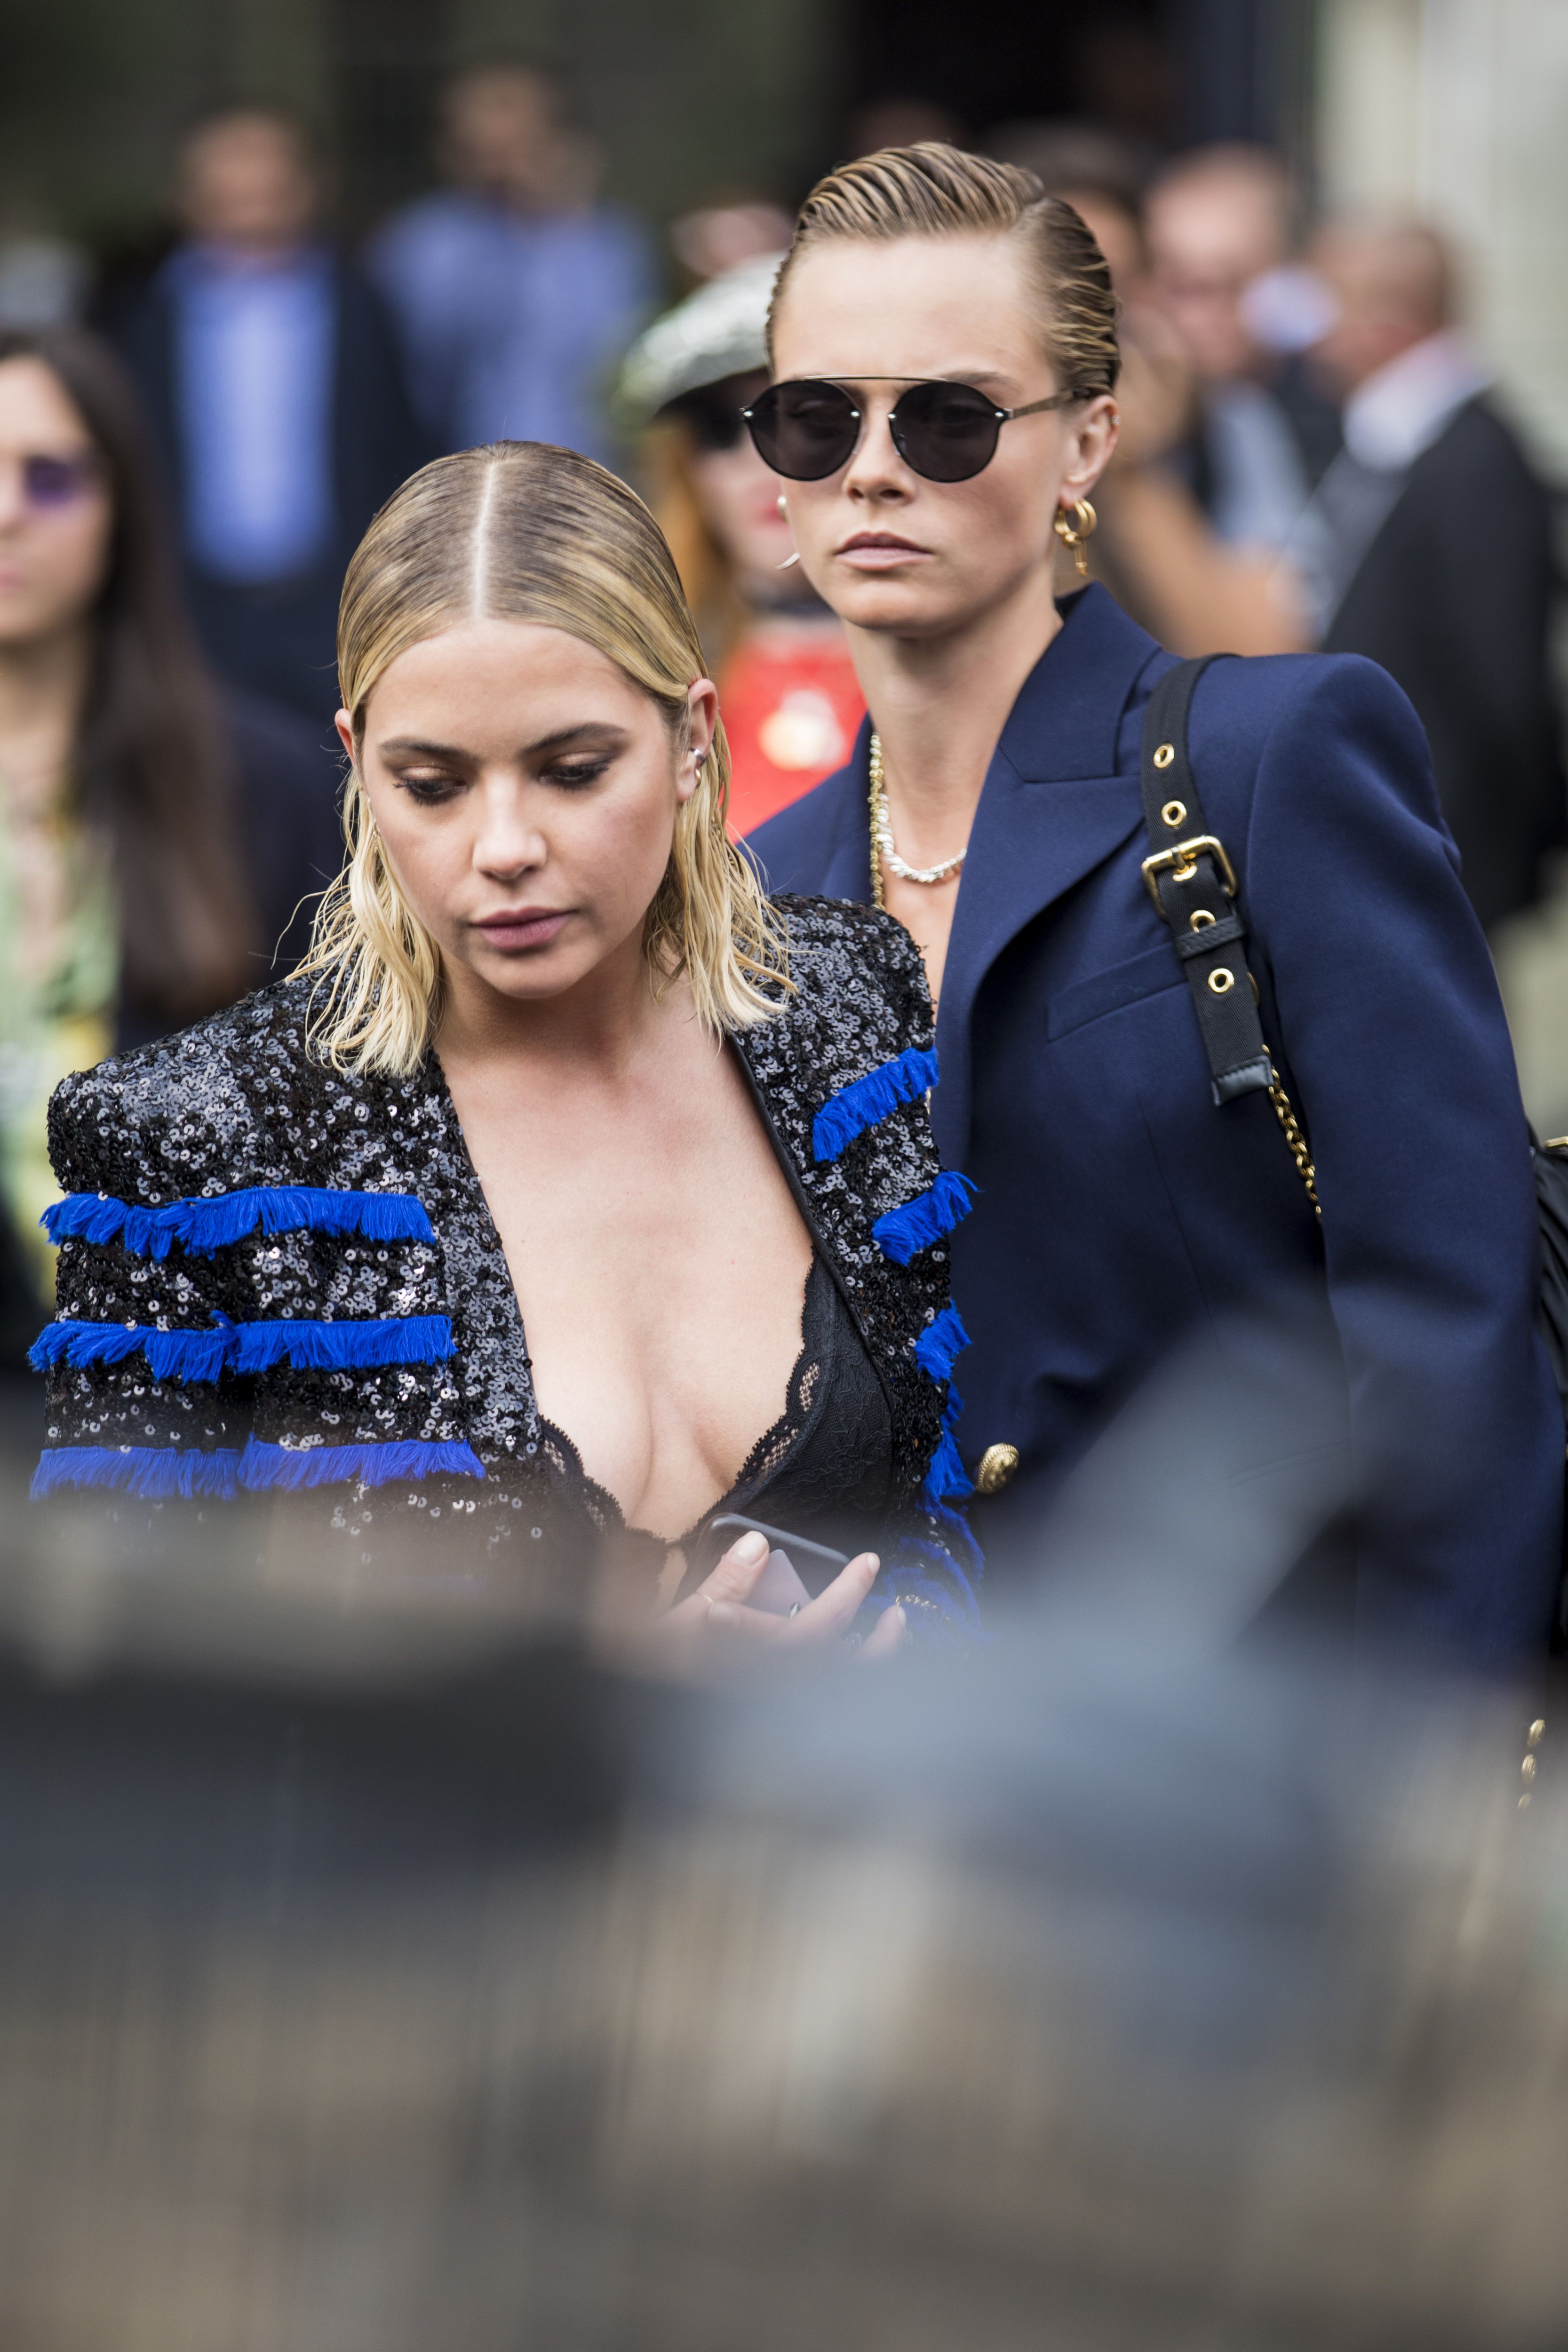 Cara Delevingne and Ashley Benson Attend Paris Fashion Week Together